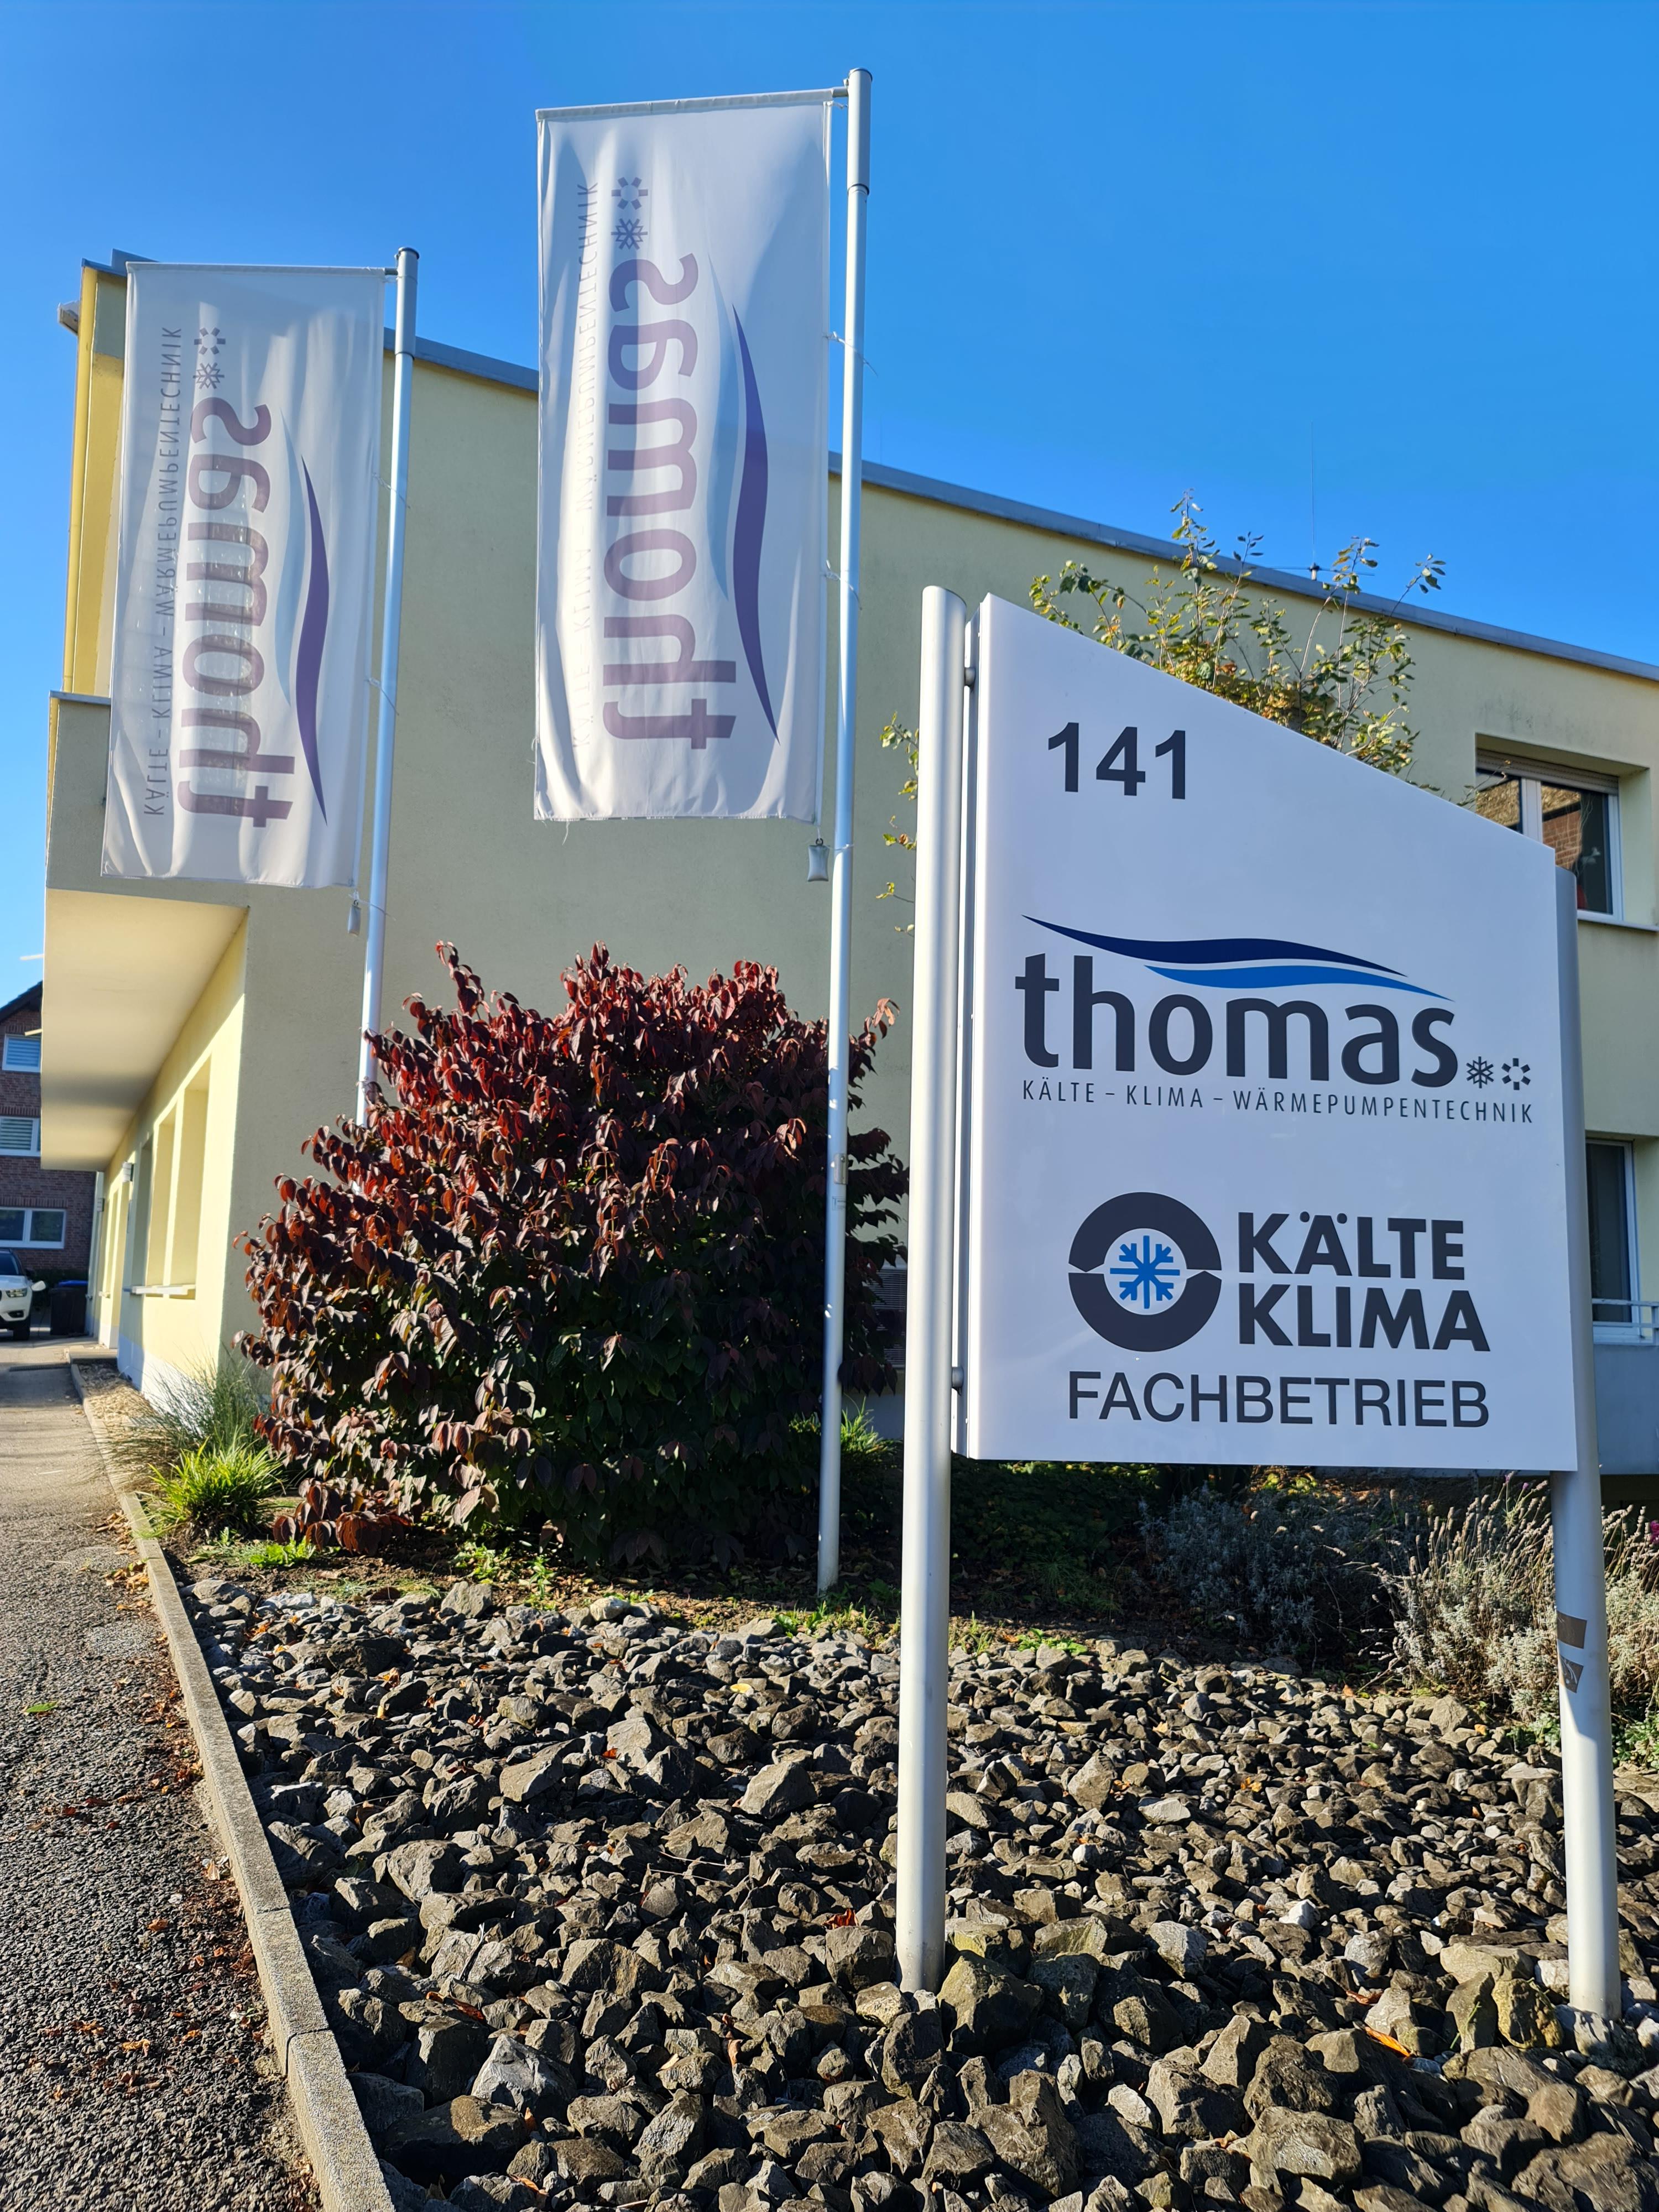 Thomas Klimatechnik GmbH, Edmund-Weber-Straße 141 in Herne